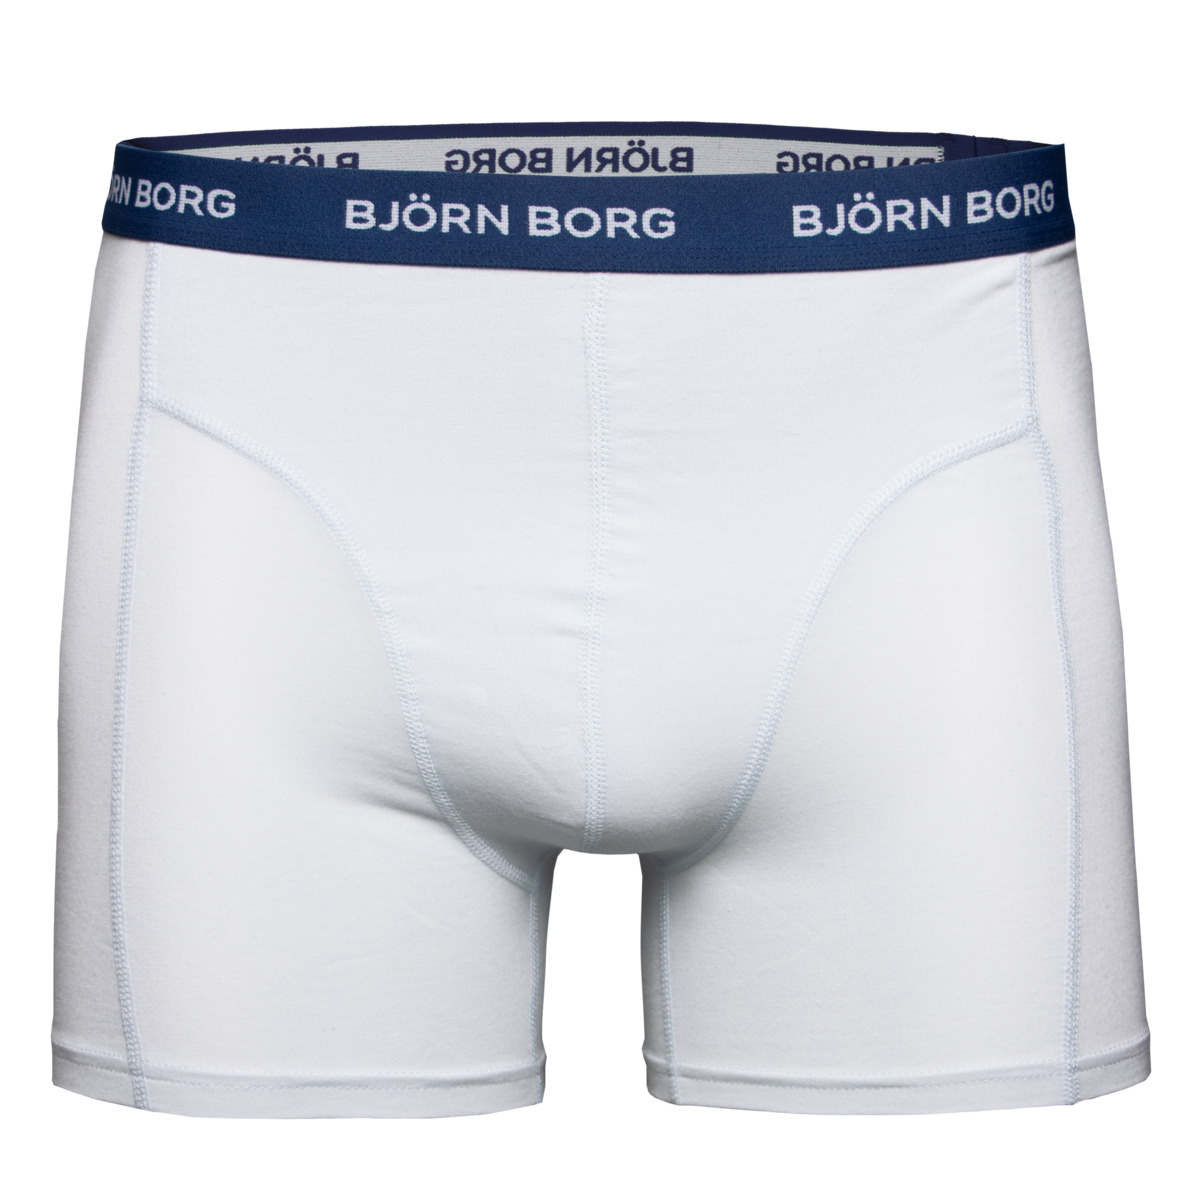 Björn Borg Cotton Stretch Boxer 5er Pack Boxershorts multicolor